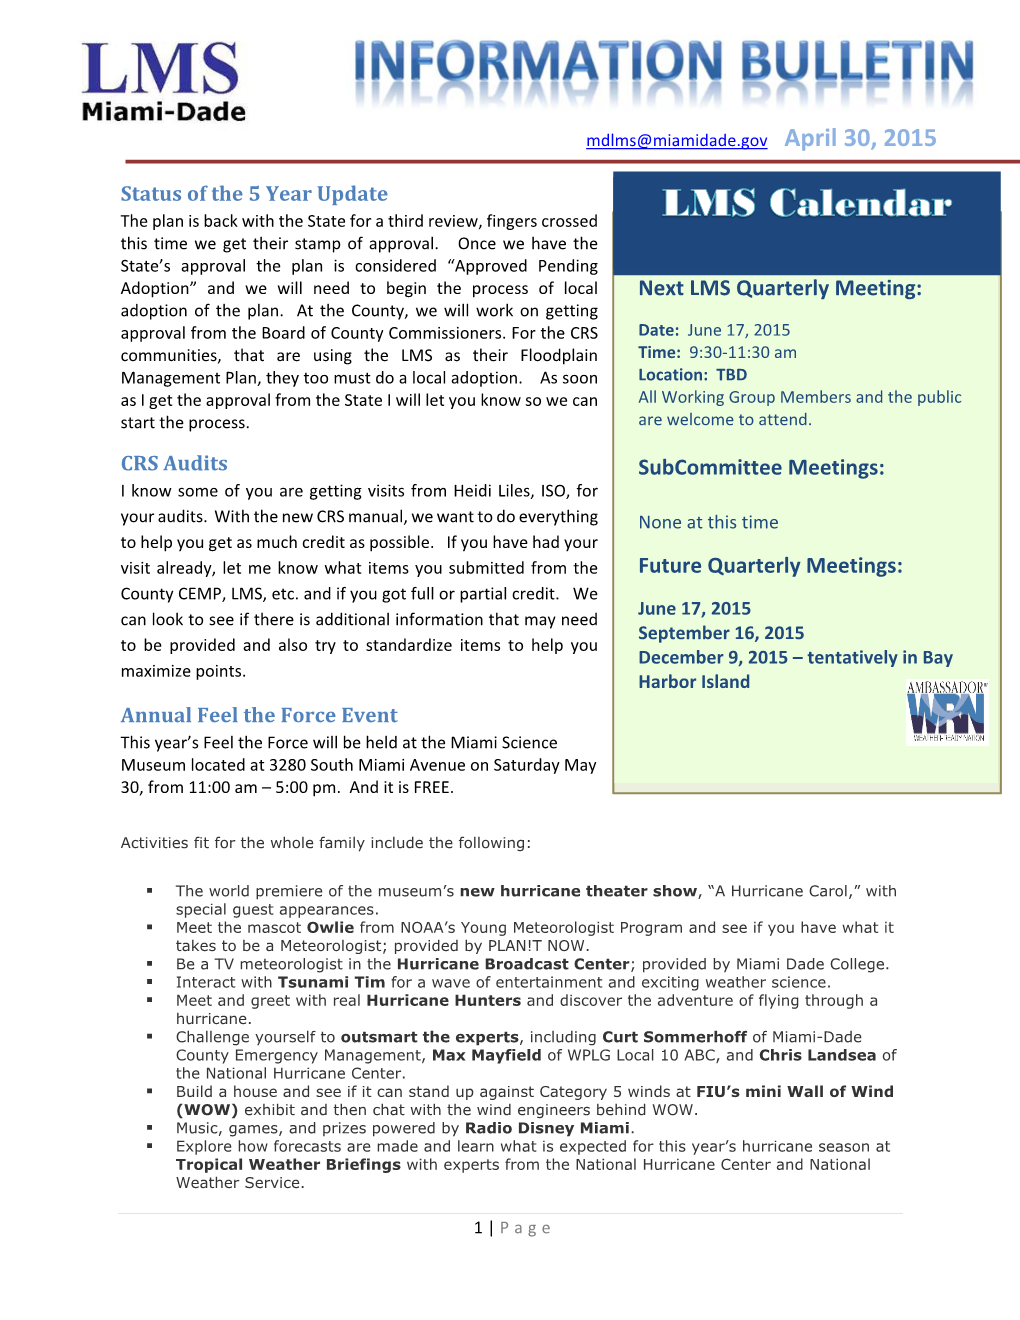 Next LMS Quarterly Meeting: Adoption of the Plan